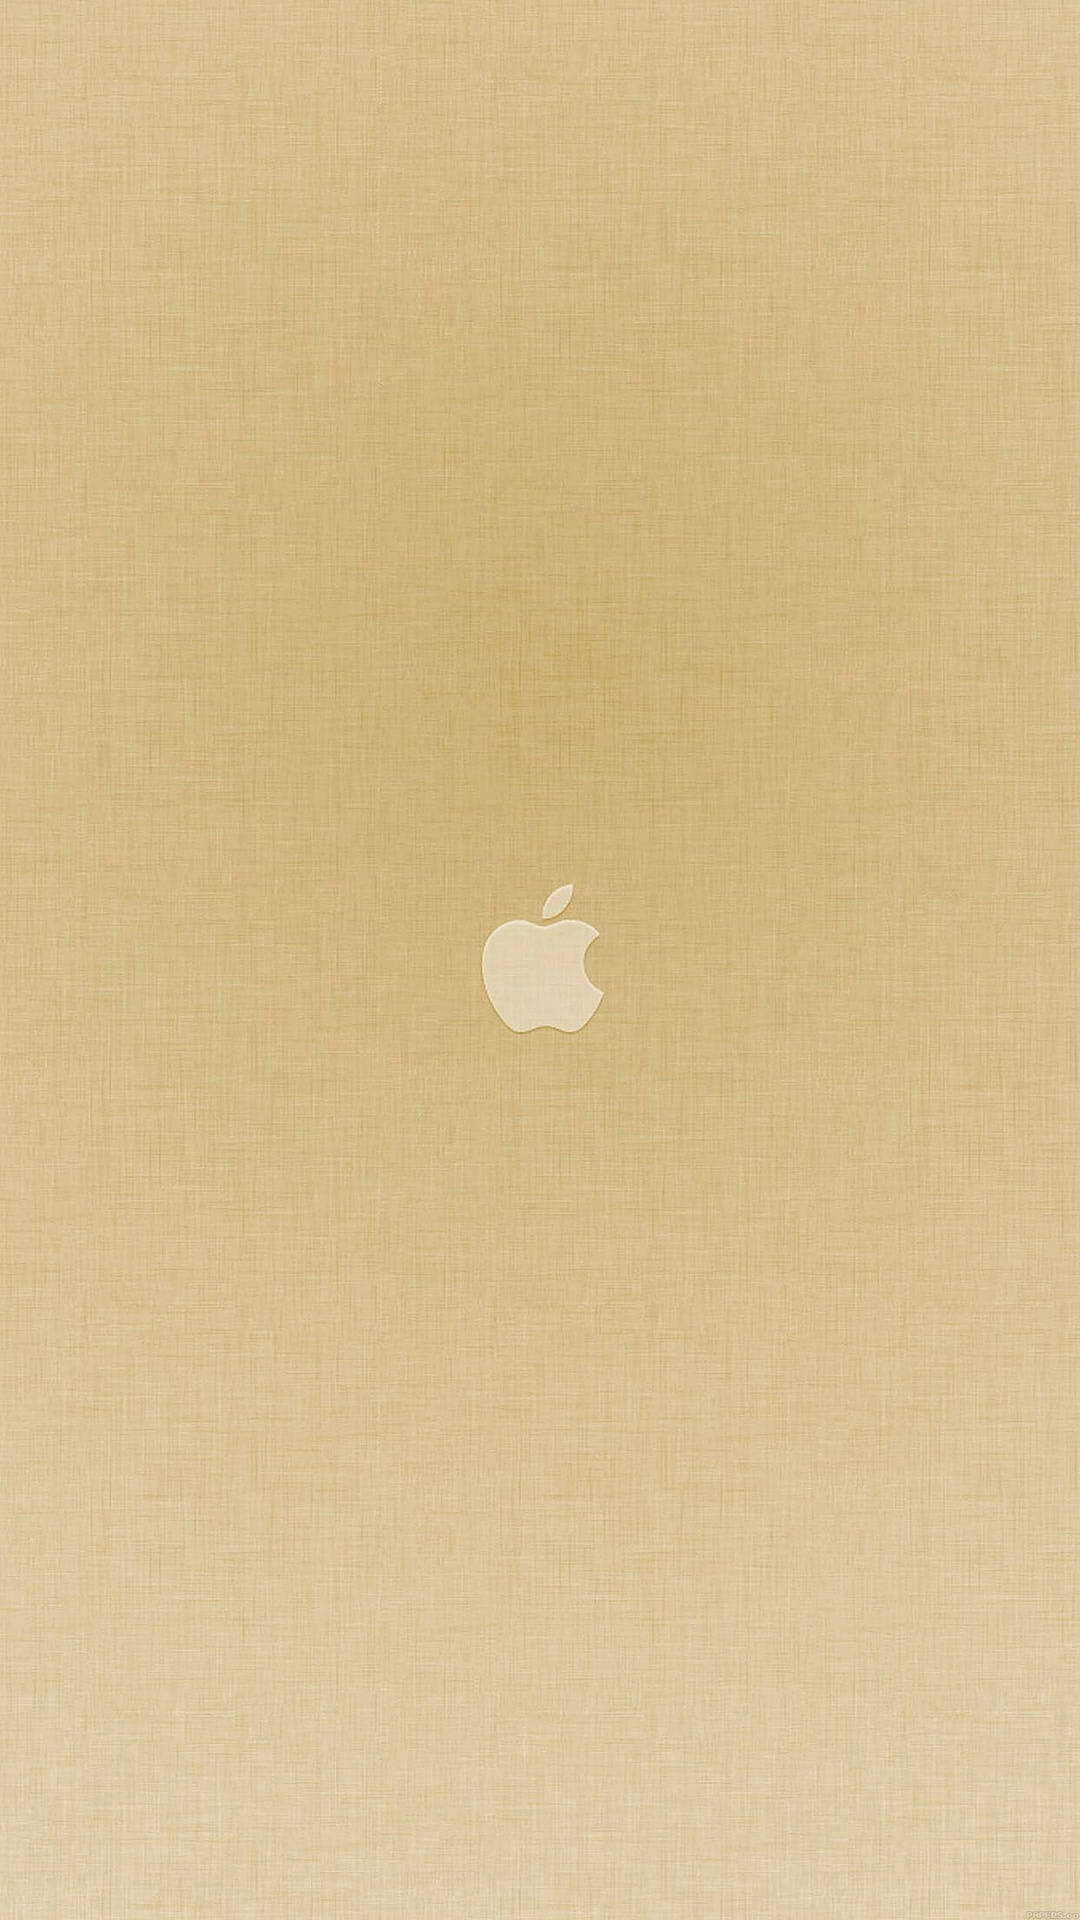 Iphone6s Gold Wallpaper